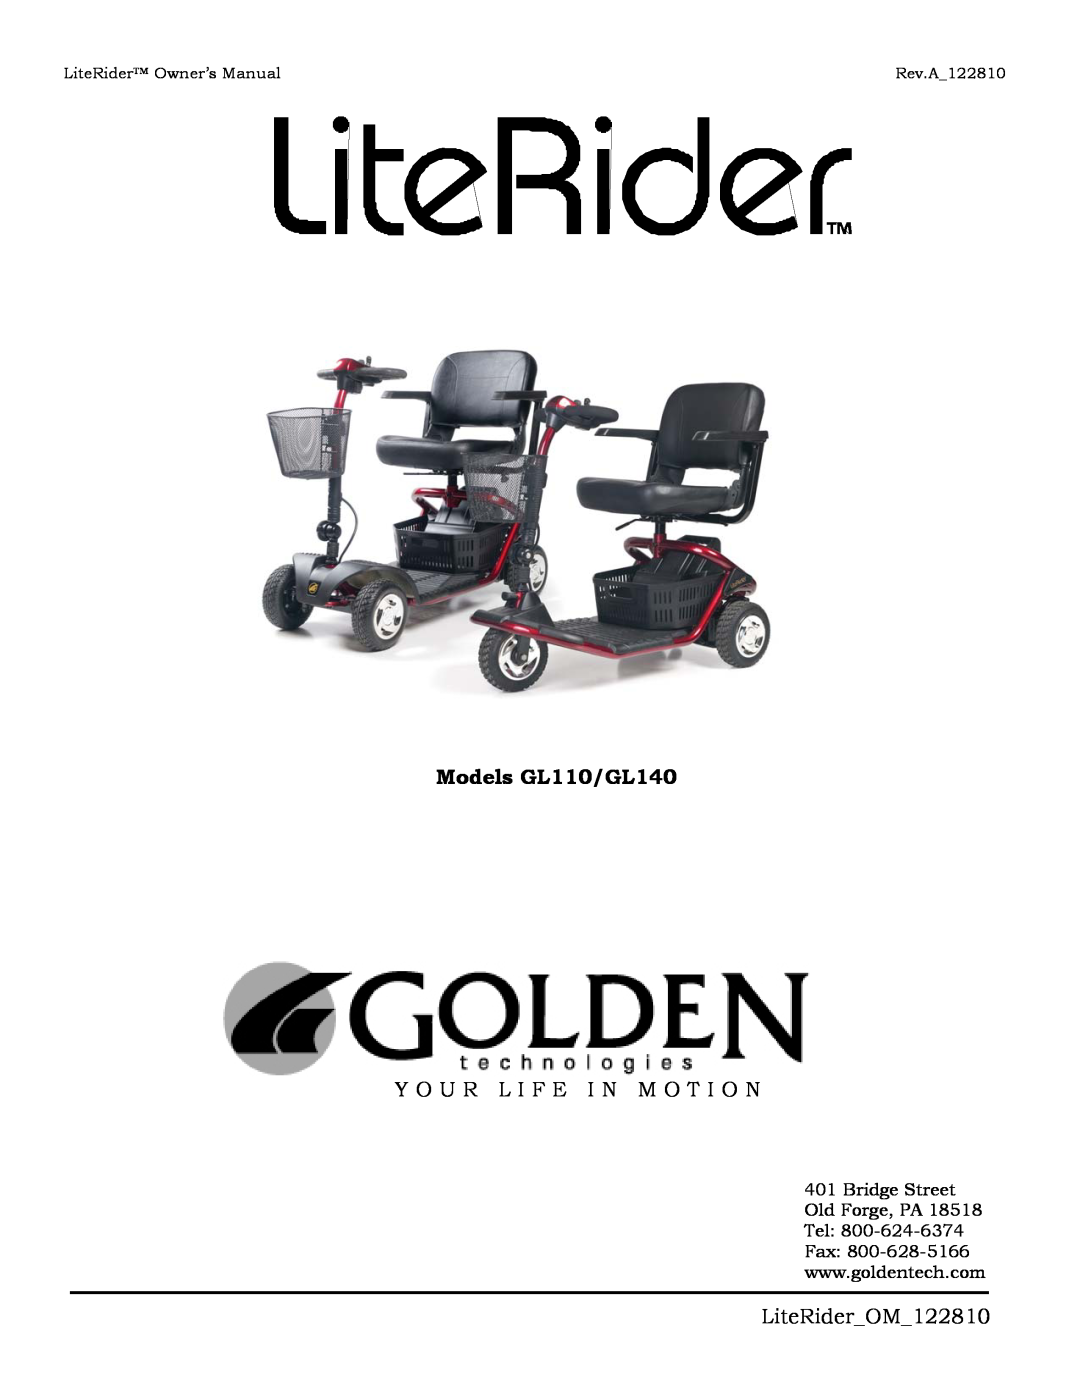 Golden Technologies Models GL110/GL140, Y O U R L I F E I N M O T I O N, LiteRiderOM122810, LiteRider Owner’s Manual 